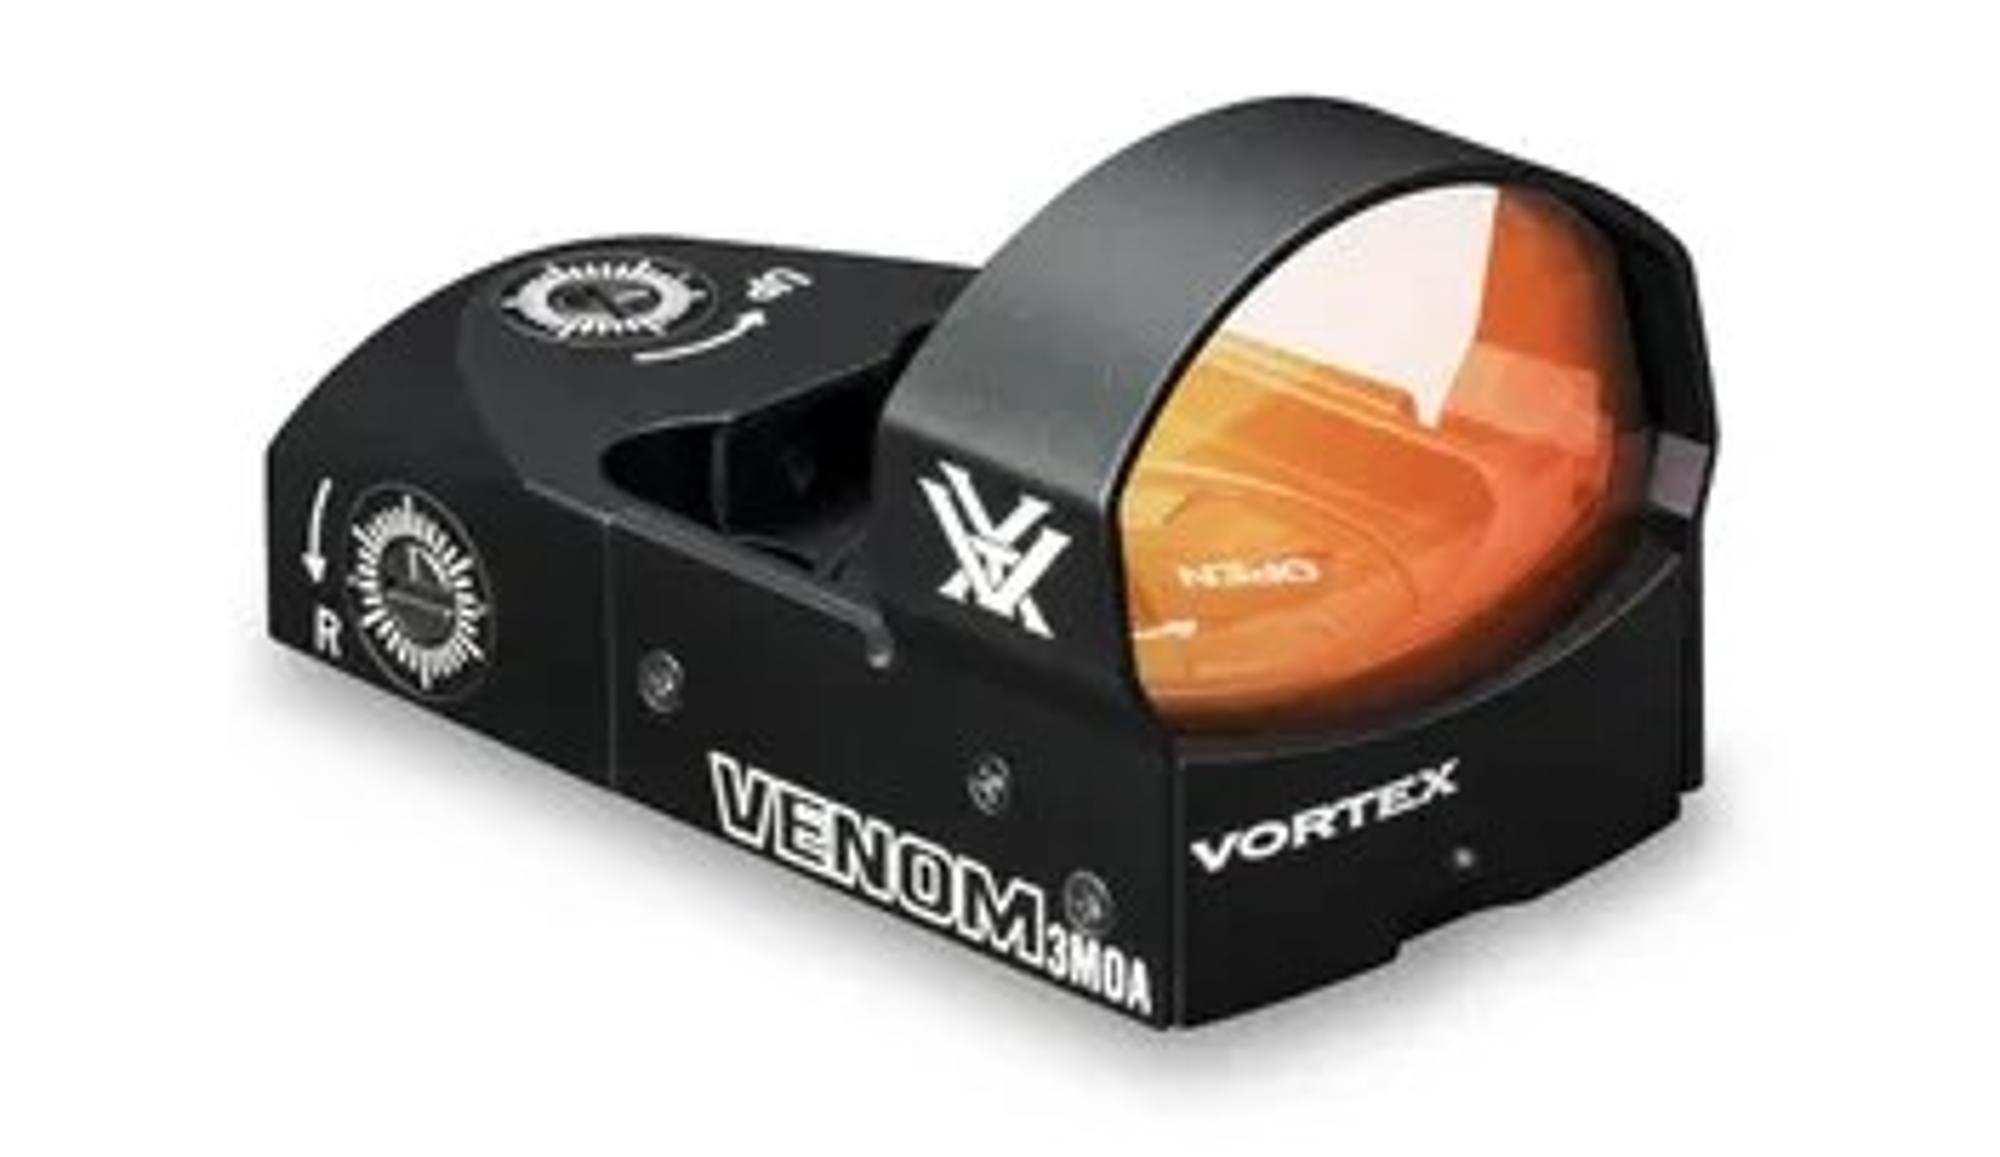 Vortex Venom Red 6 Moa